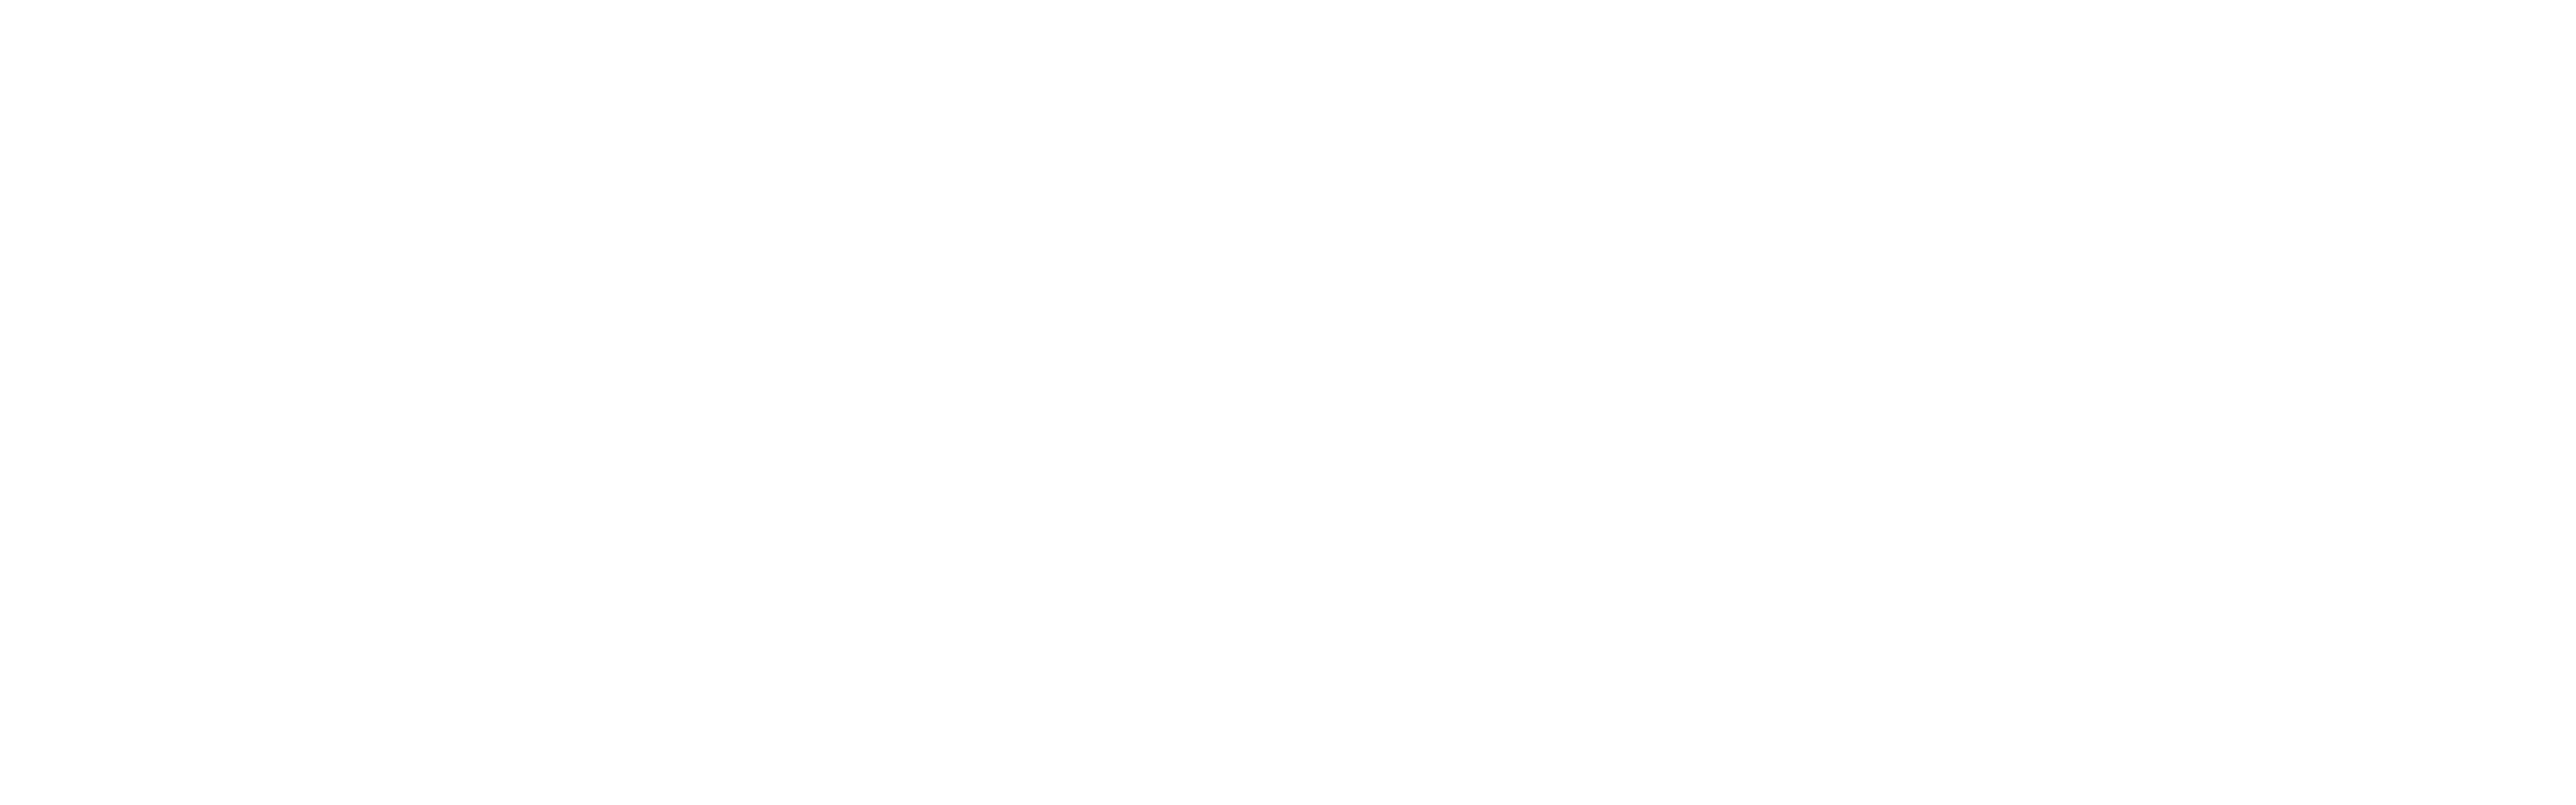 EZ Digital Marketing agency white-logo-mobile